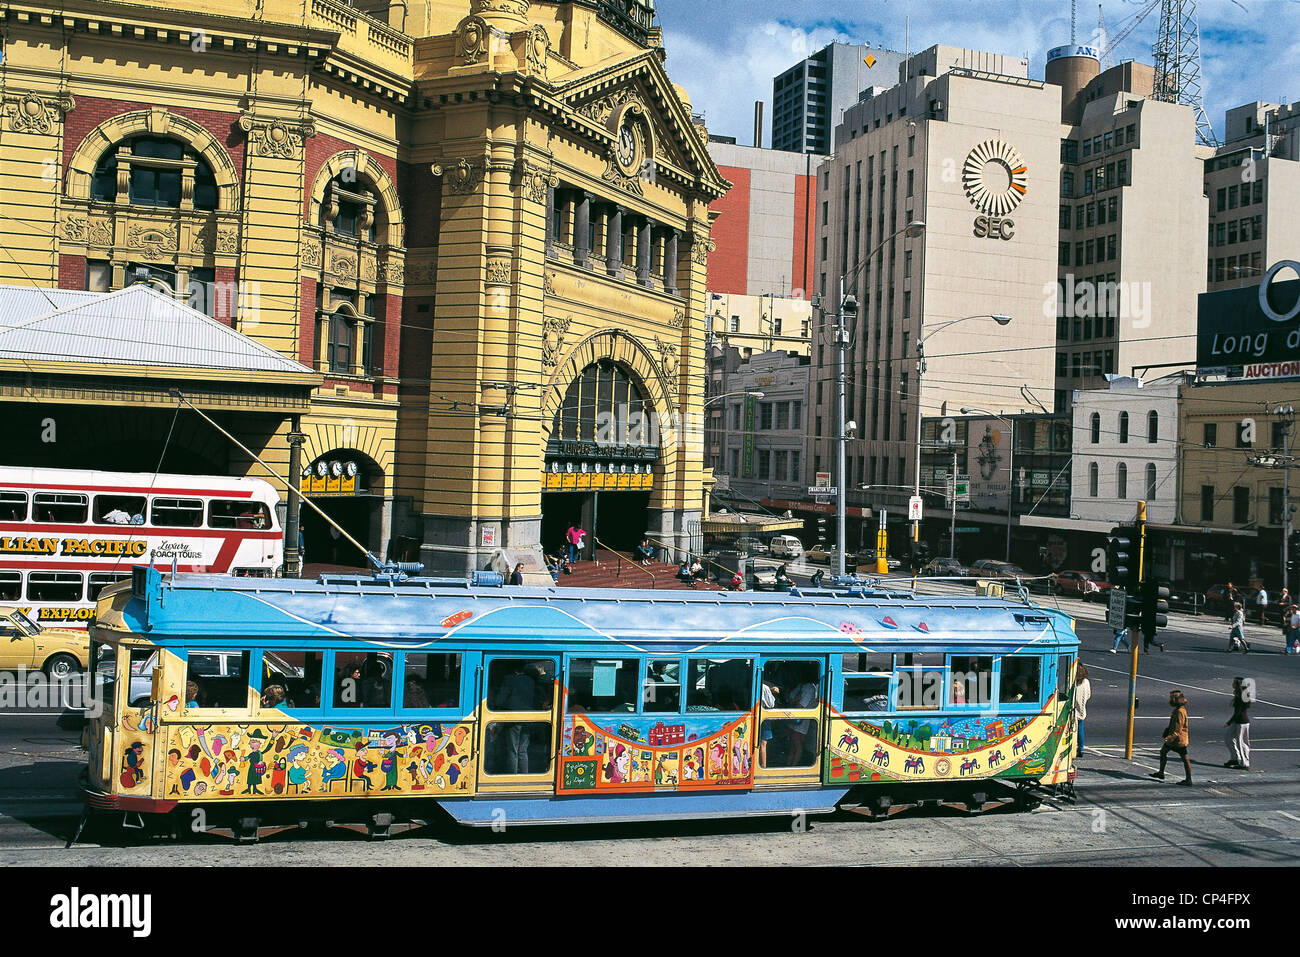 Australia - Victoria - Melbourne. Tram in front of Flinders Street railway station. Stock Photo